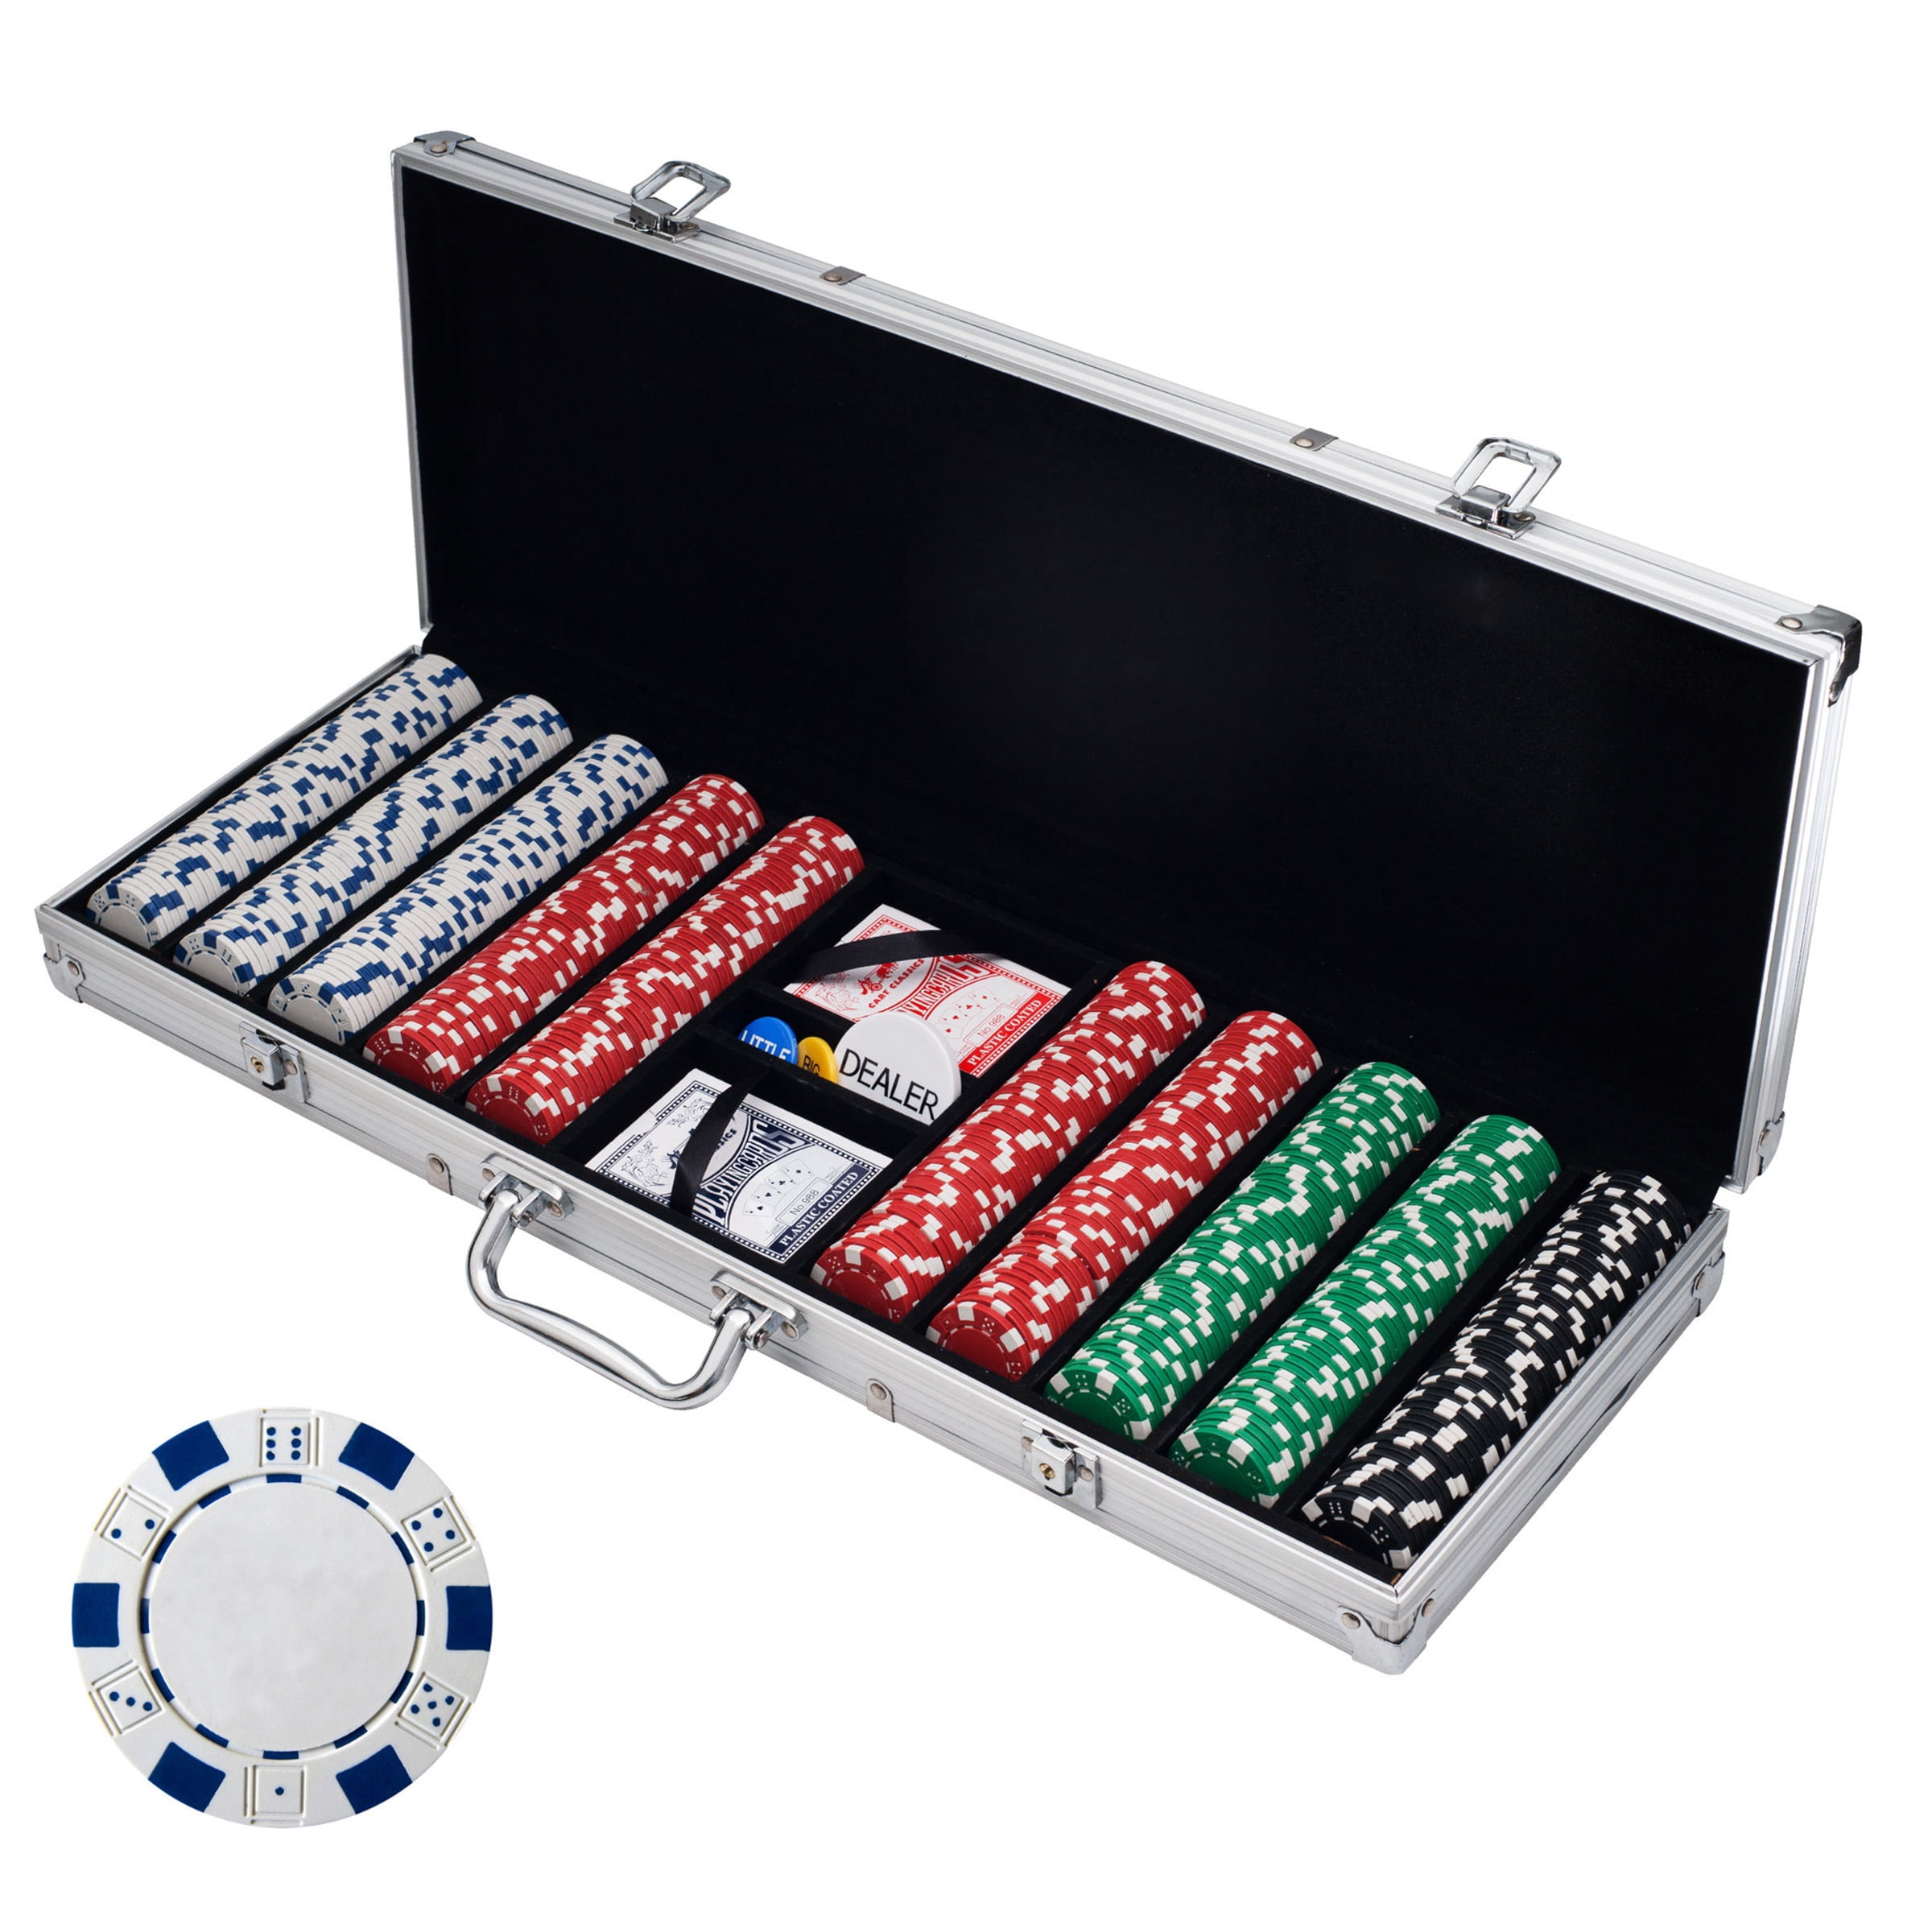 Set Poker Chips Chips Tokens Chips 100 Pieces 5 Colors Dealer Texas Hold'em 